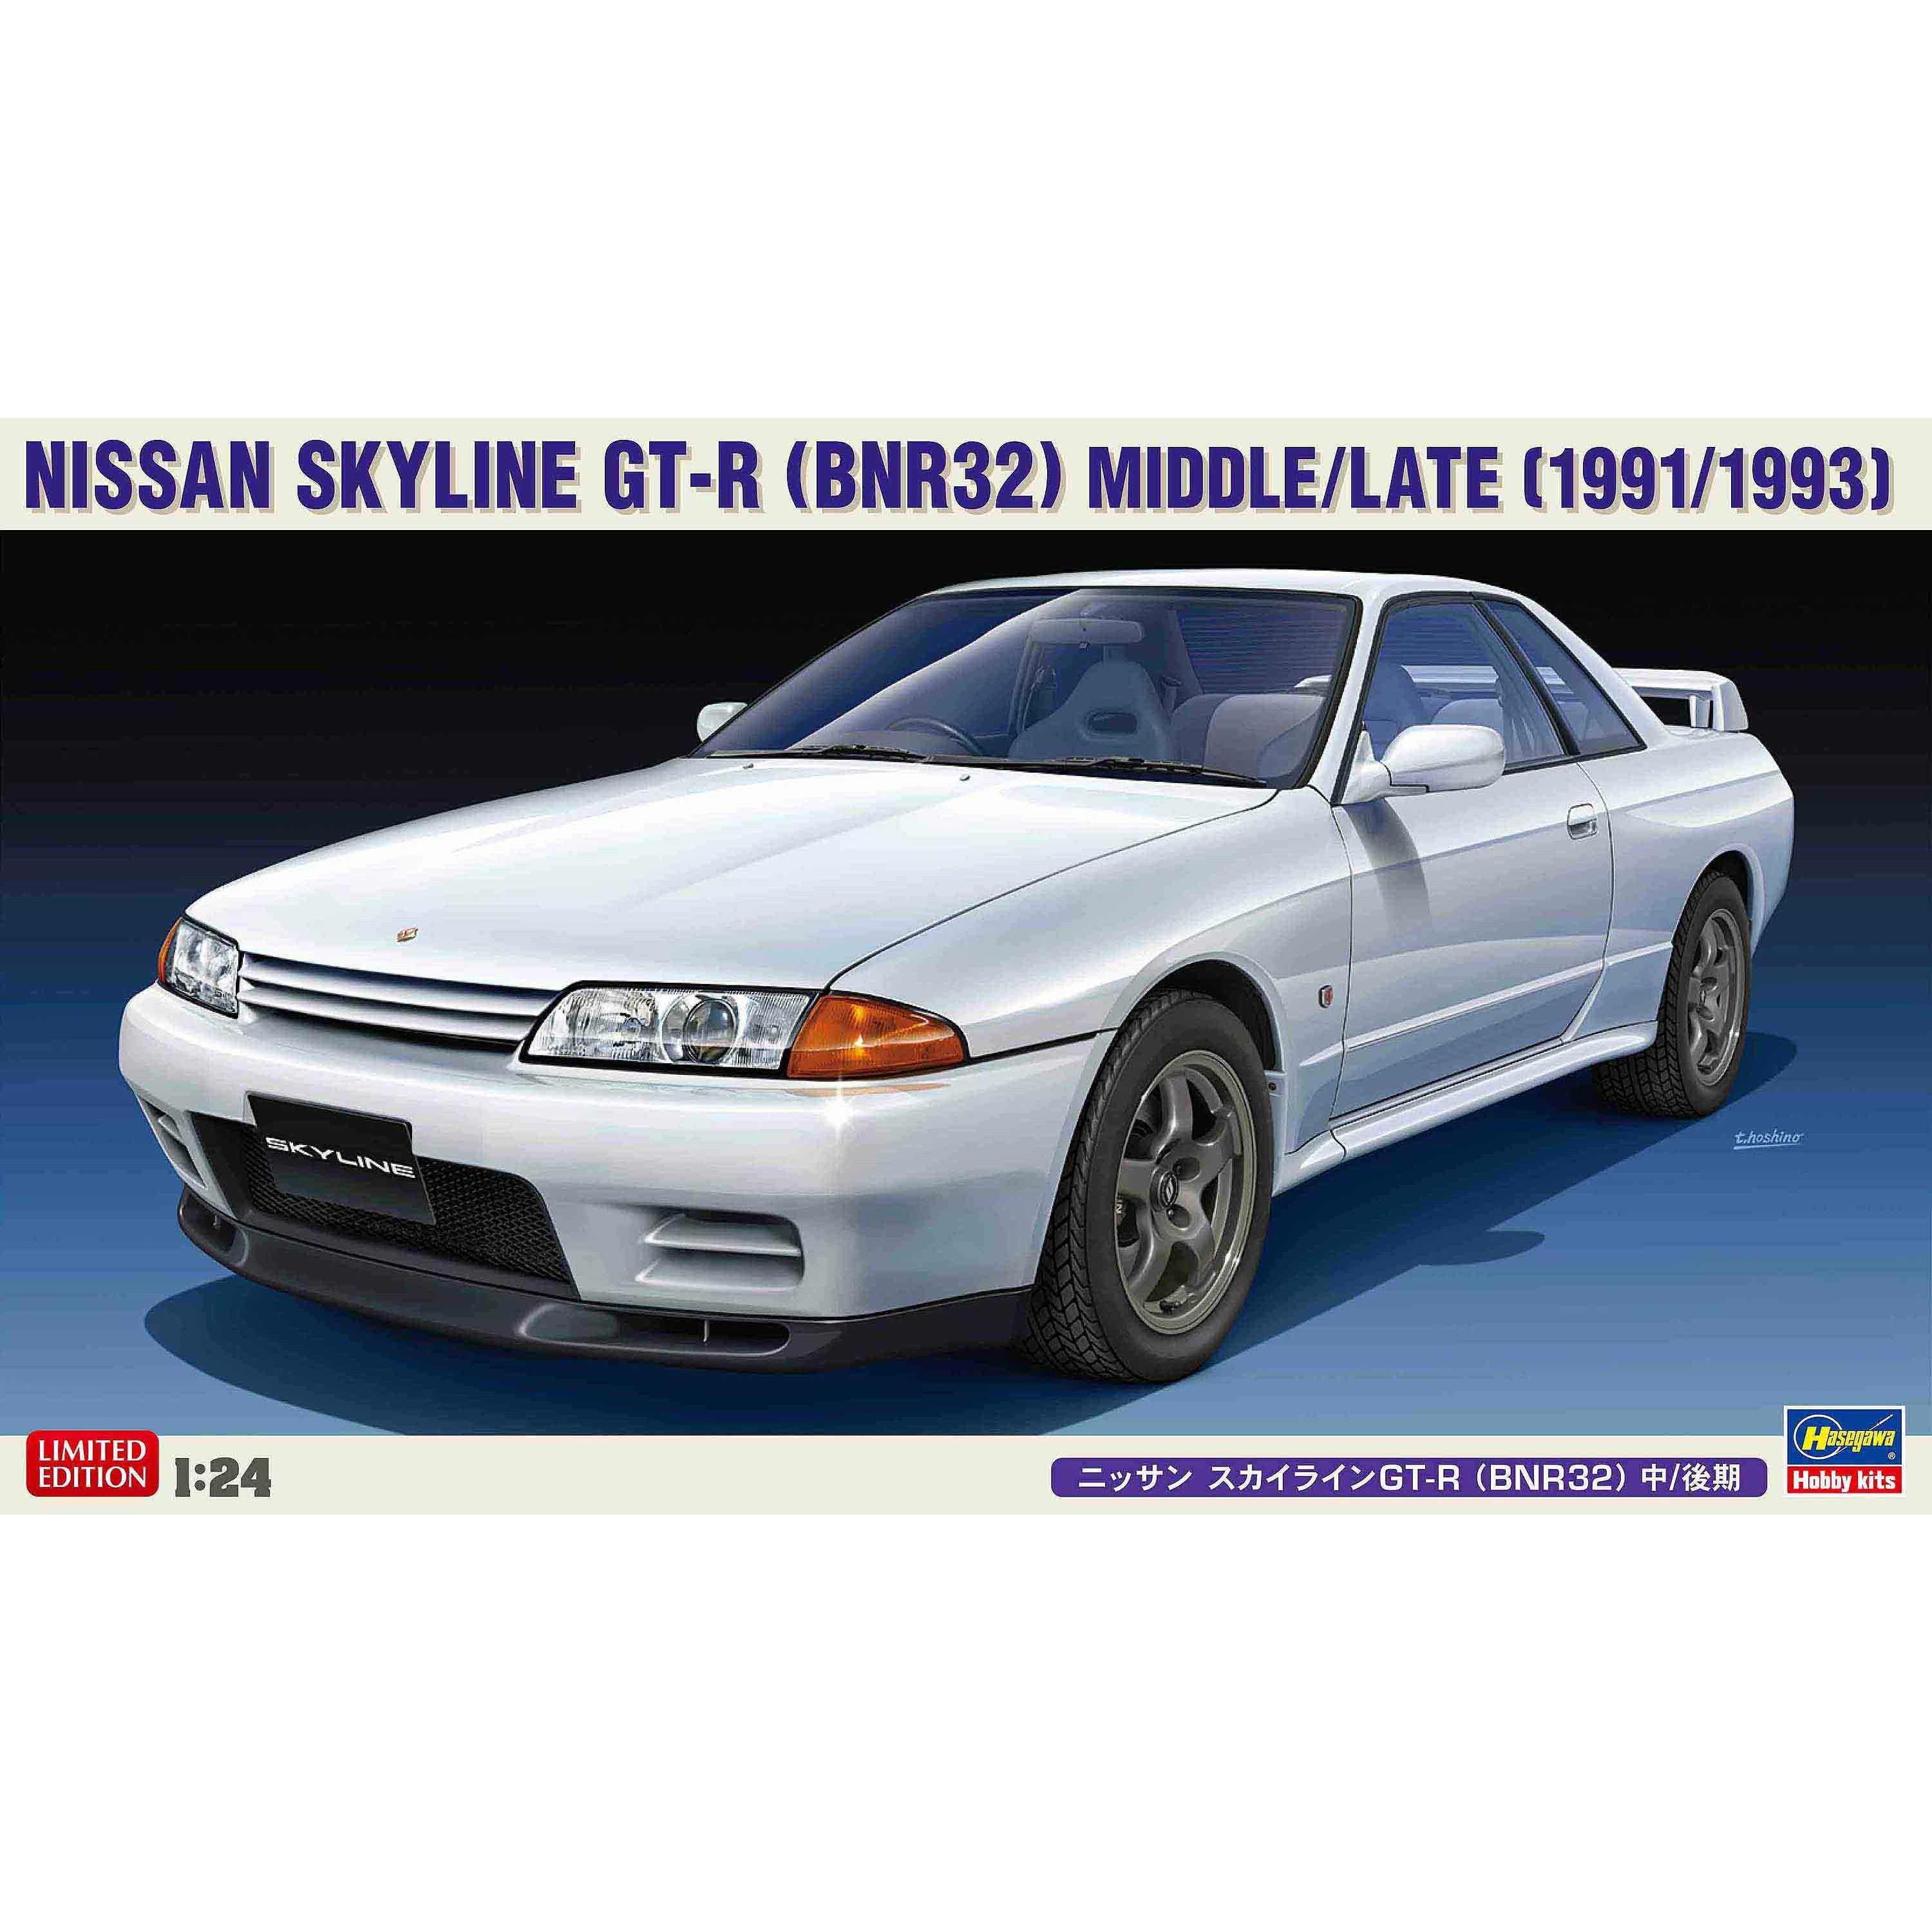 Nissan Skyline GT-R (BNR32) Middle/Late 1/24 Model Car Kit #20544 by Hasegawa